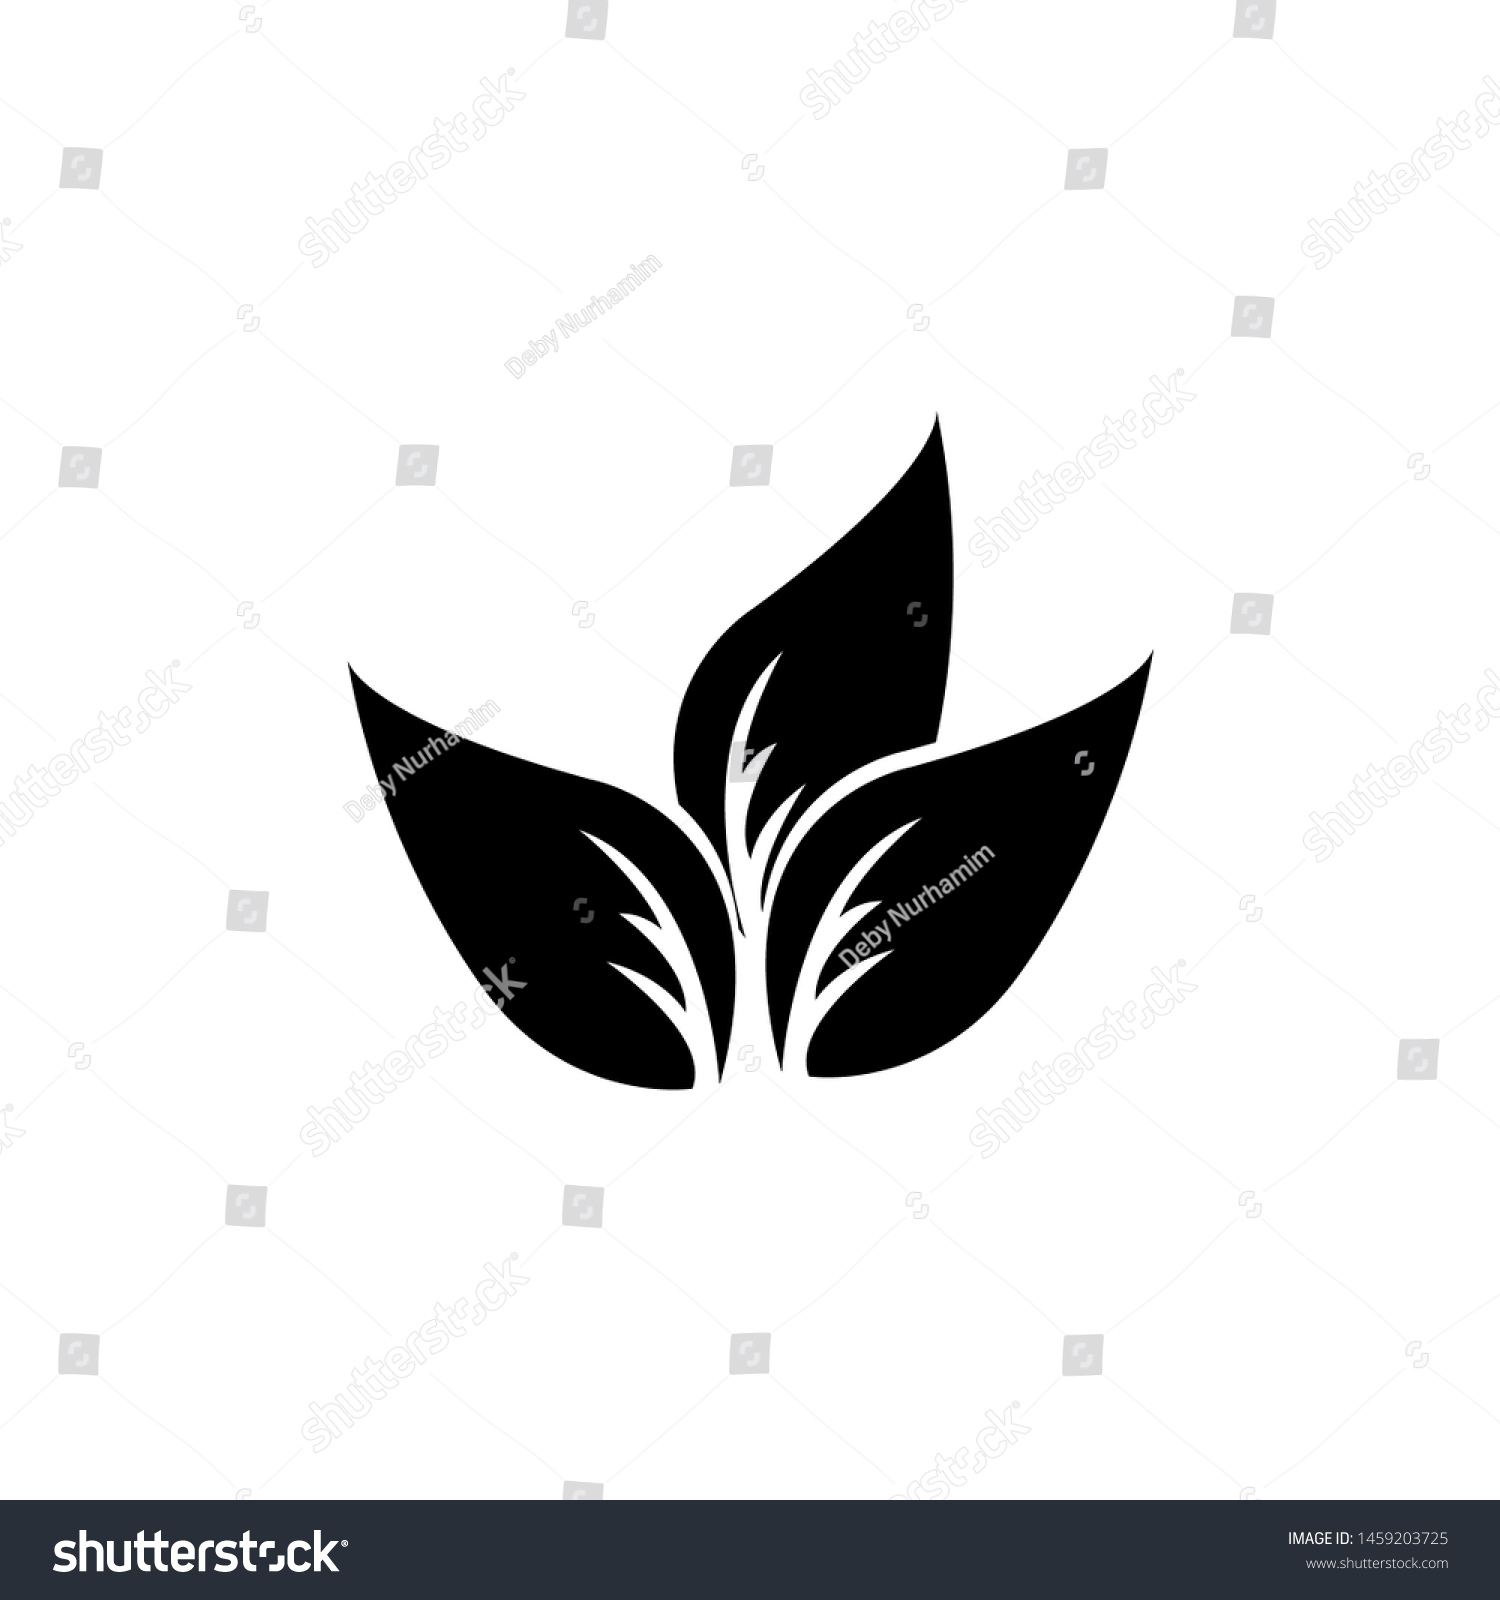 Tea leaf vector symbol. Leaf symbol symbol icon #1459203725